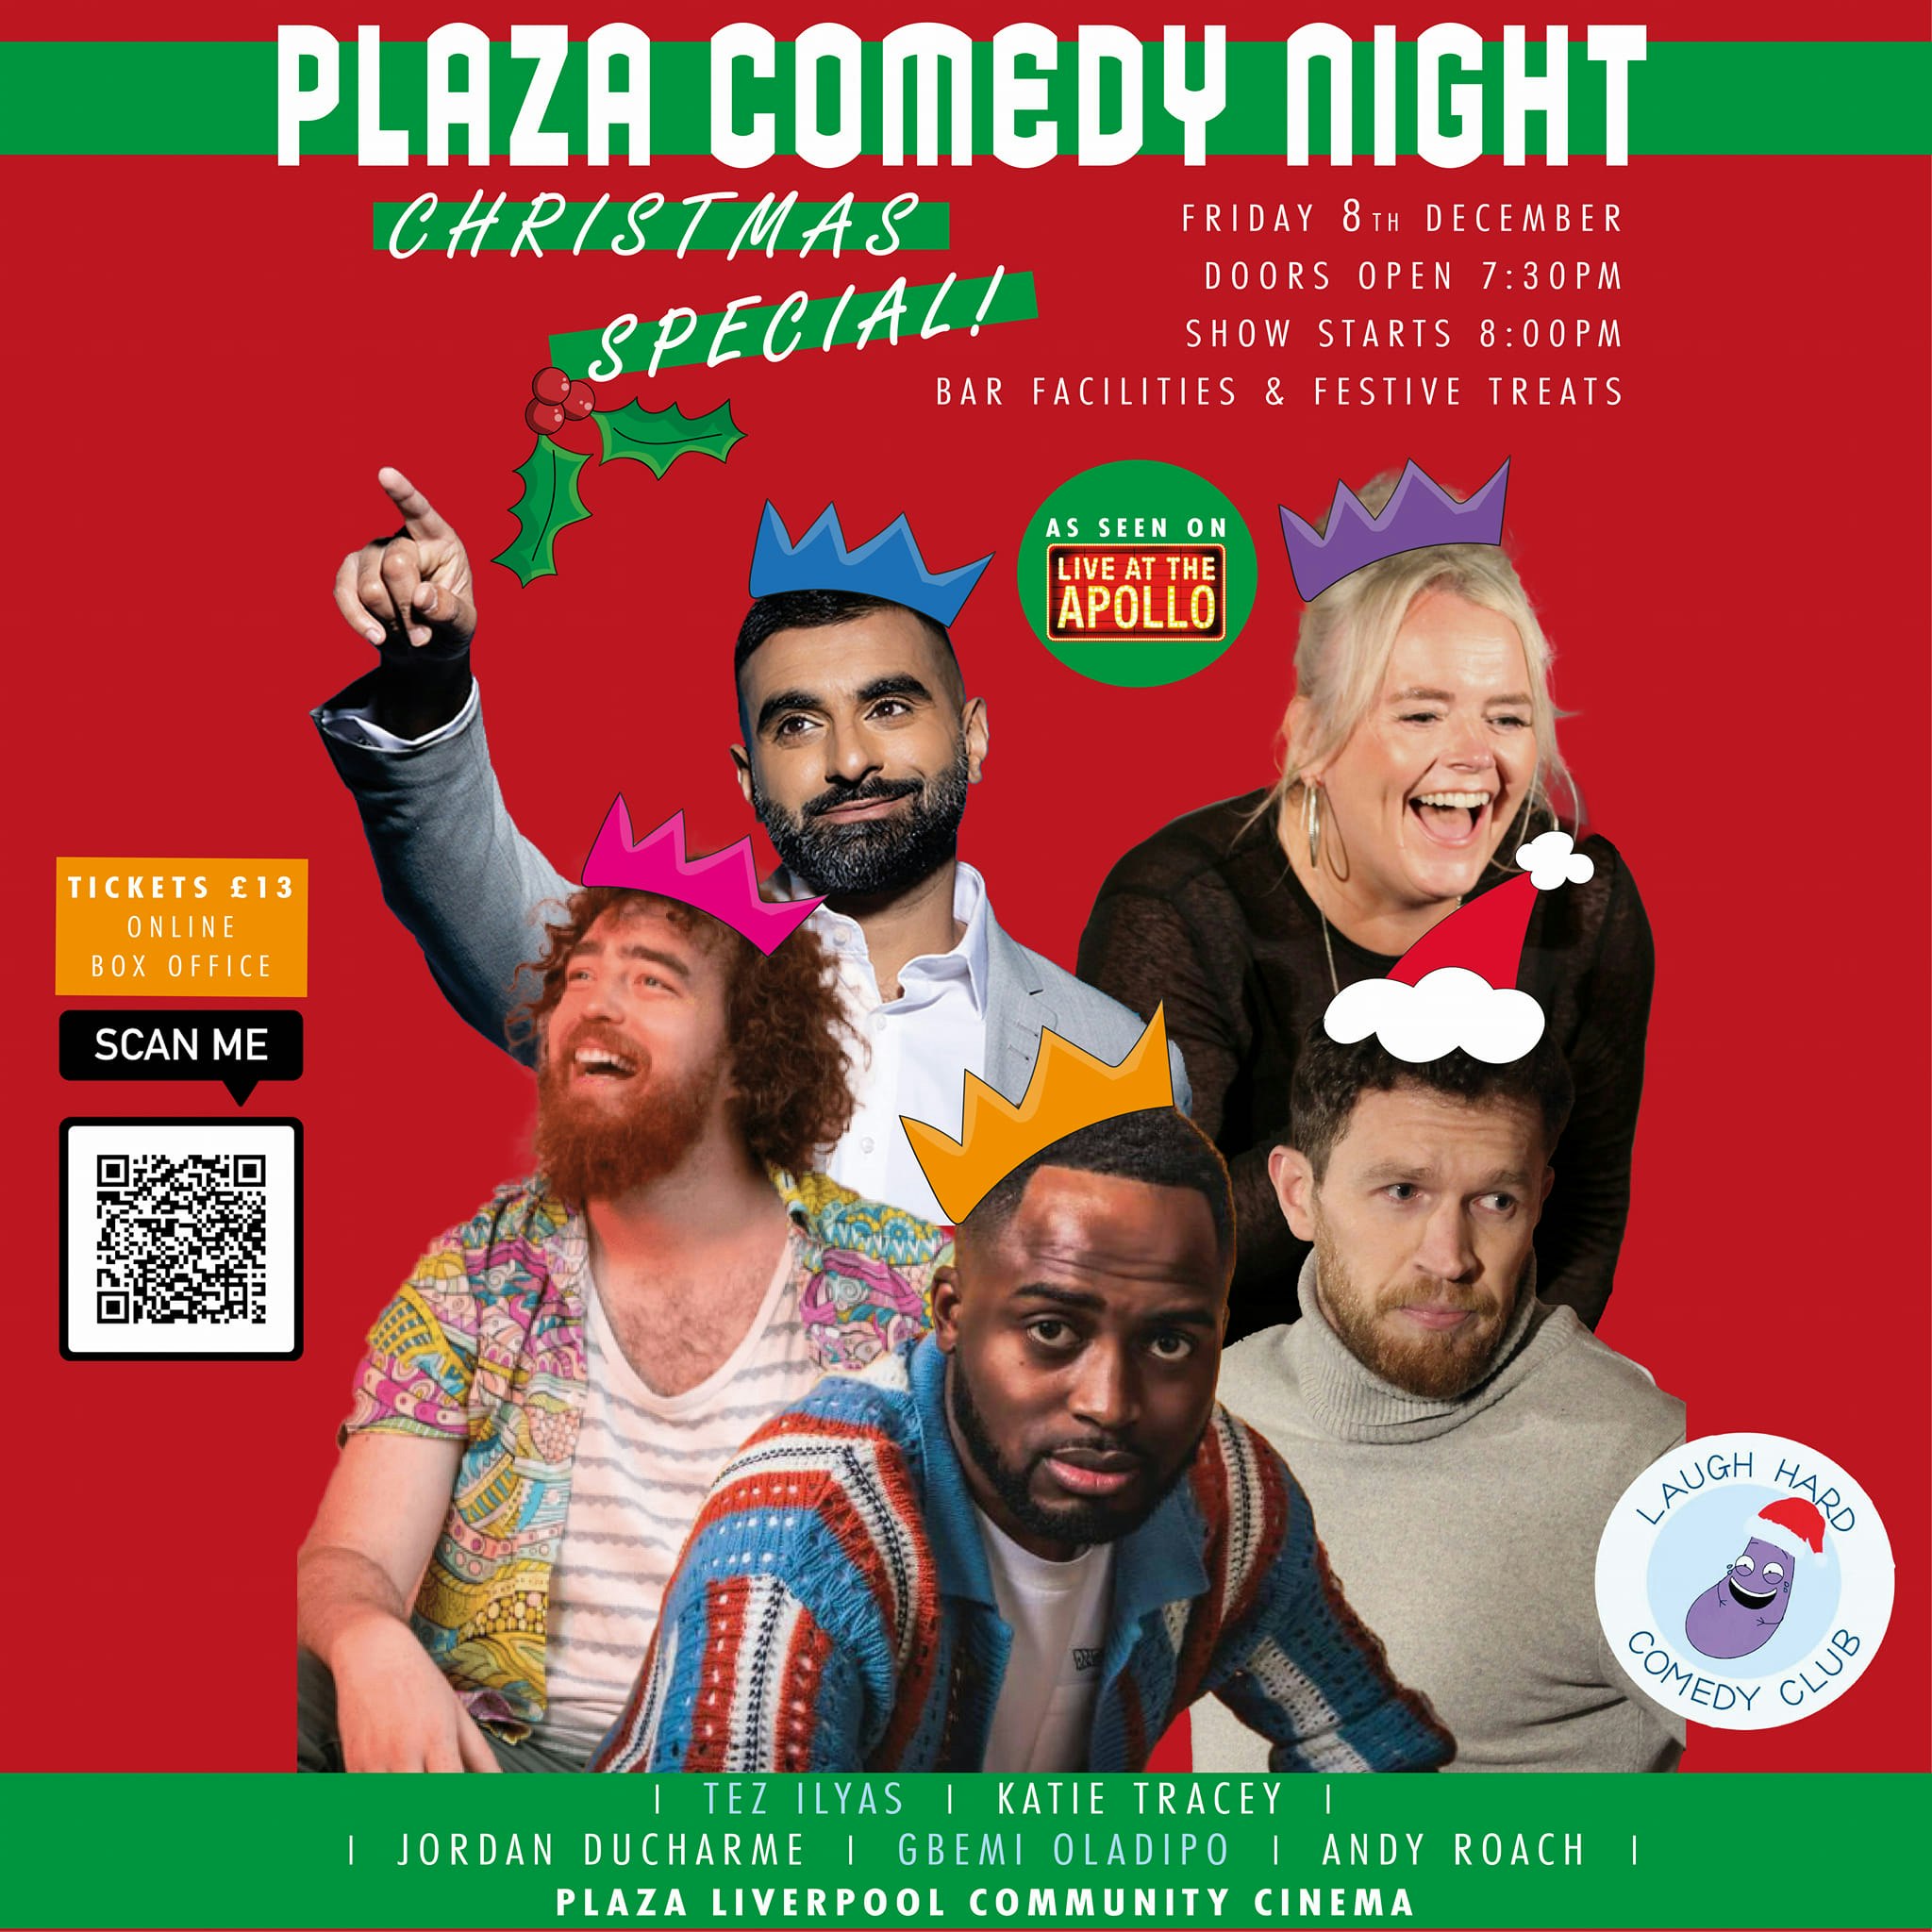 Plaza Comedy Night